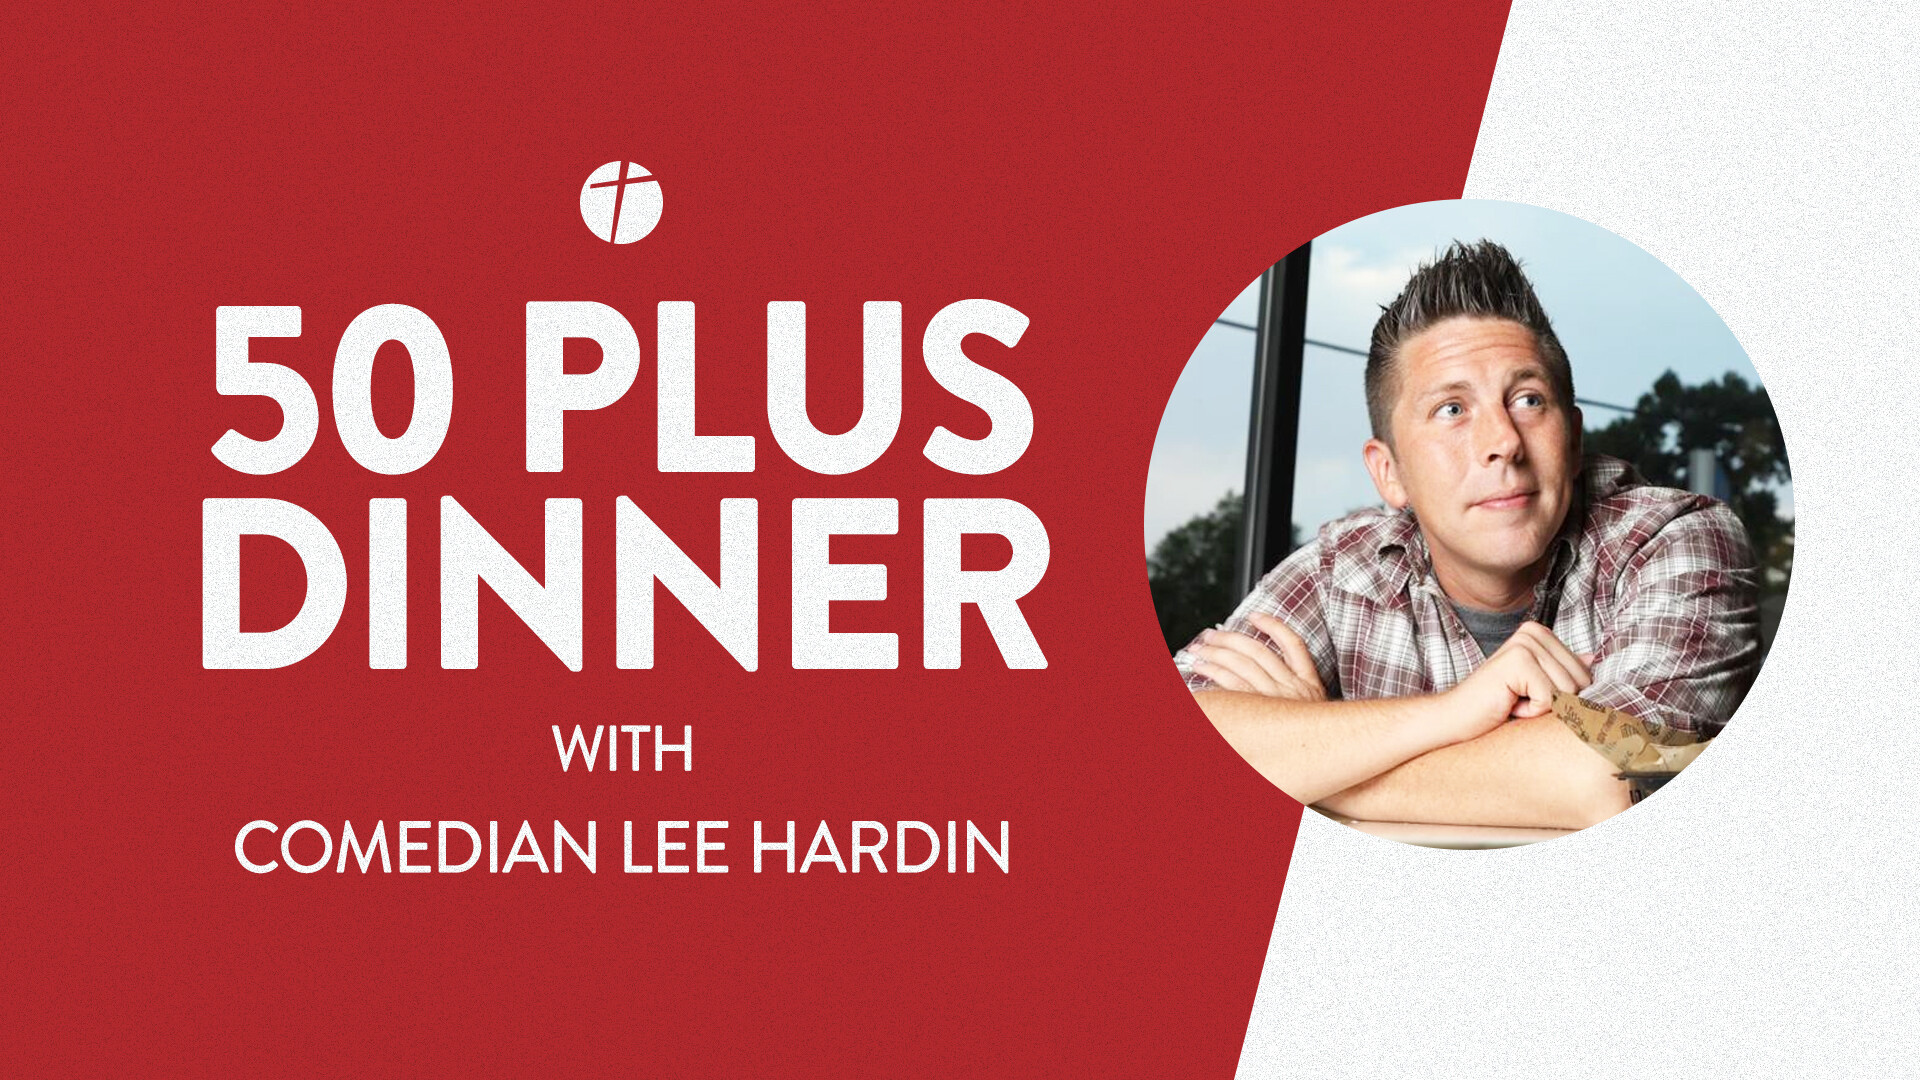 50 Plus Dinner with Comedian Lee Hardin